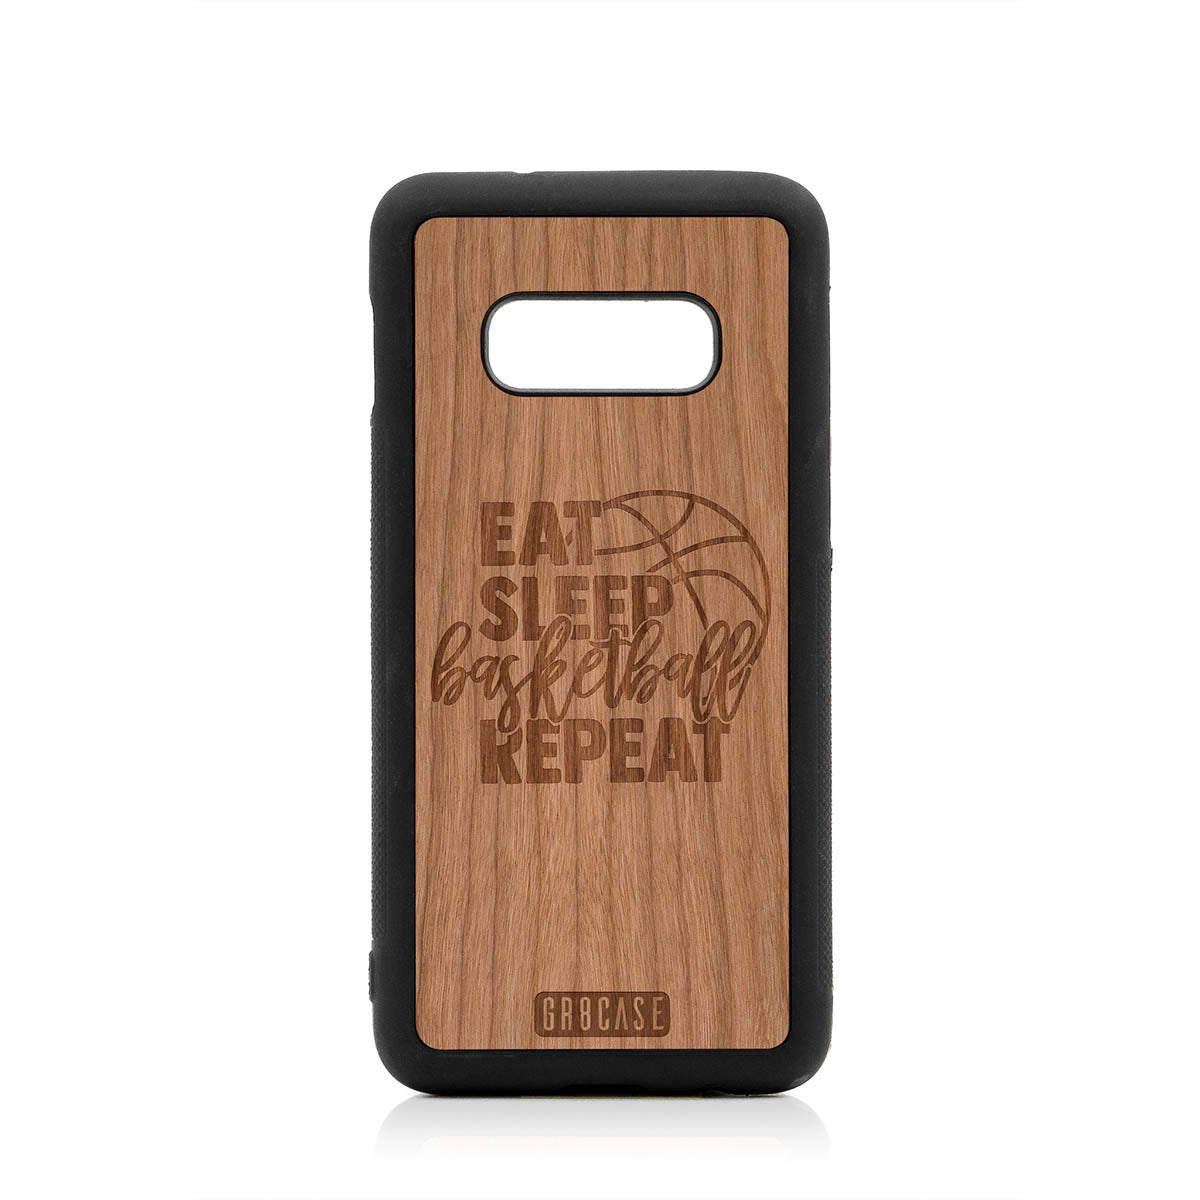 Eat Sleep Basketball Repeat Design Wood Case For Samsung Galaxy A10E